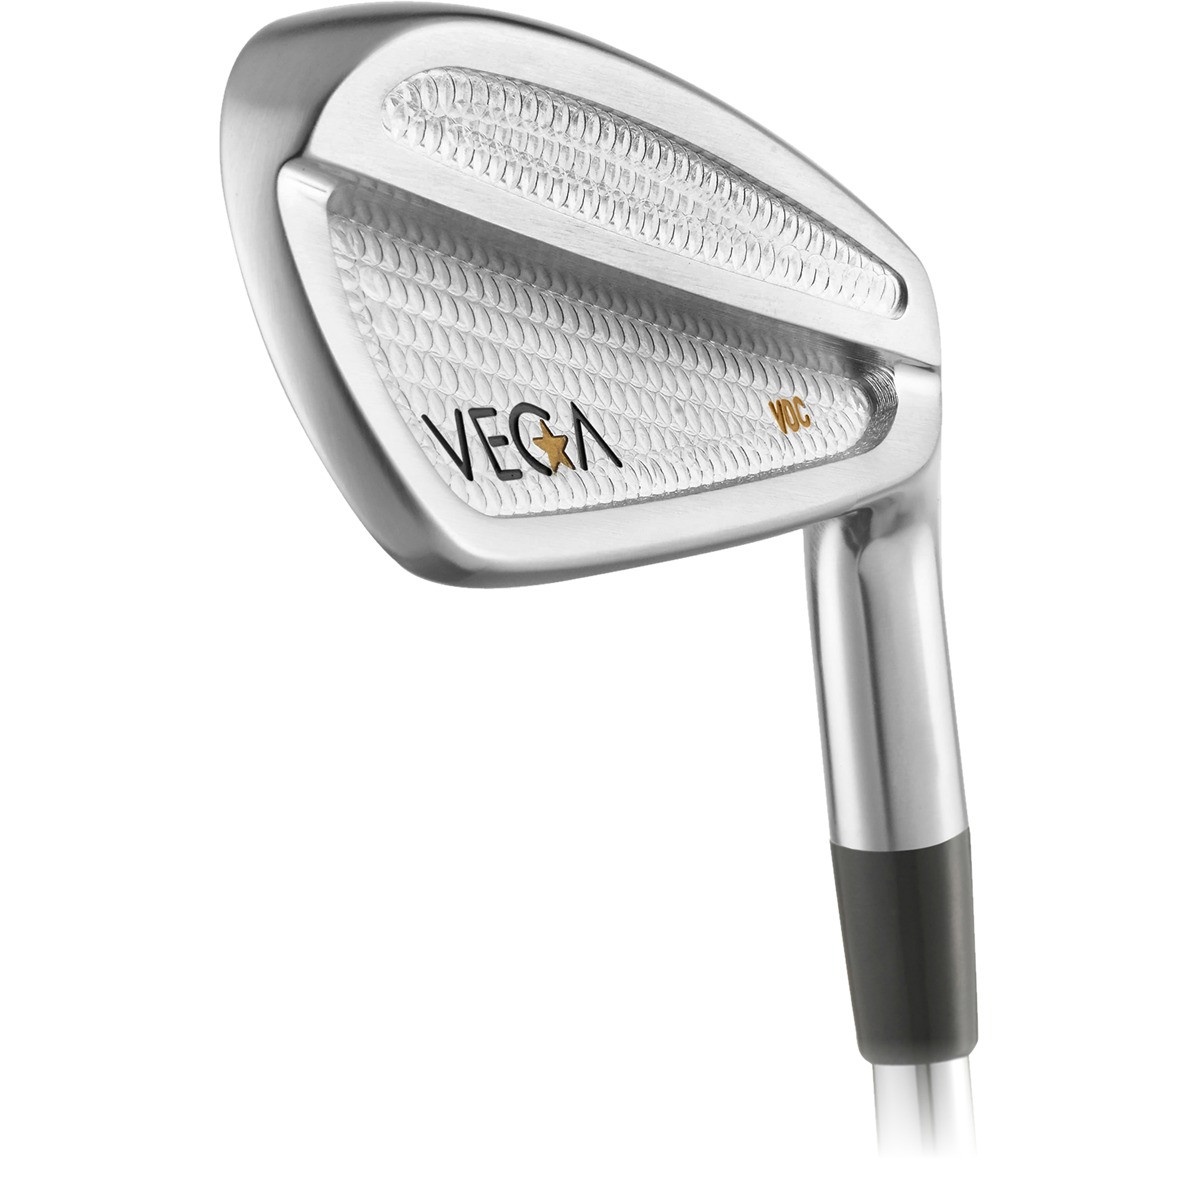 Vega Custom VDC Irons image 2